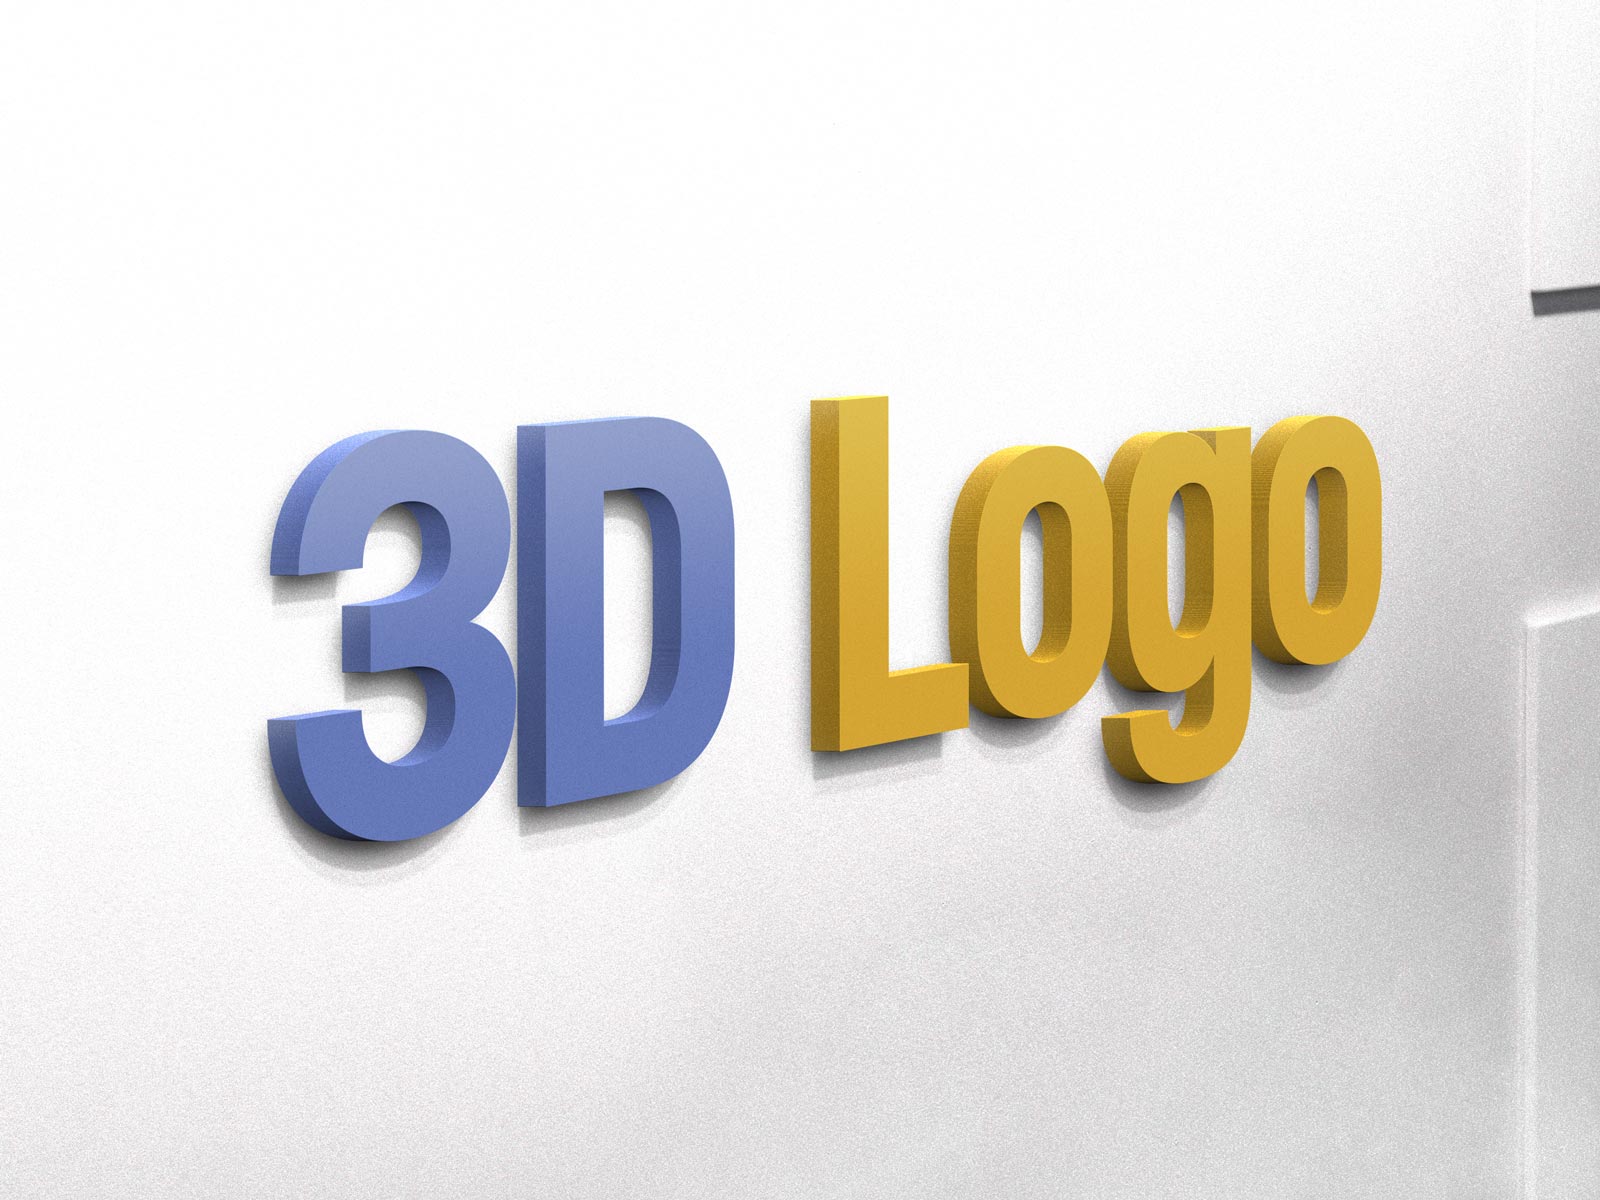 3d wall logo mockup psd free download - jesworx